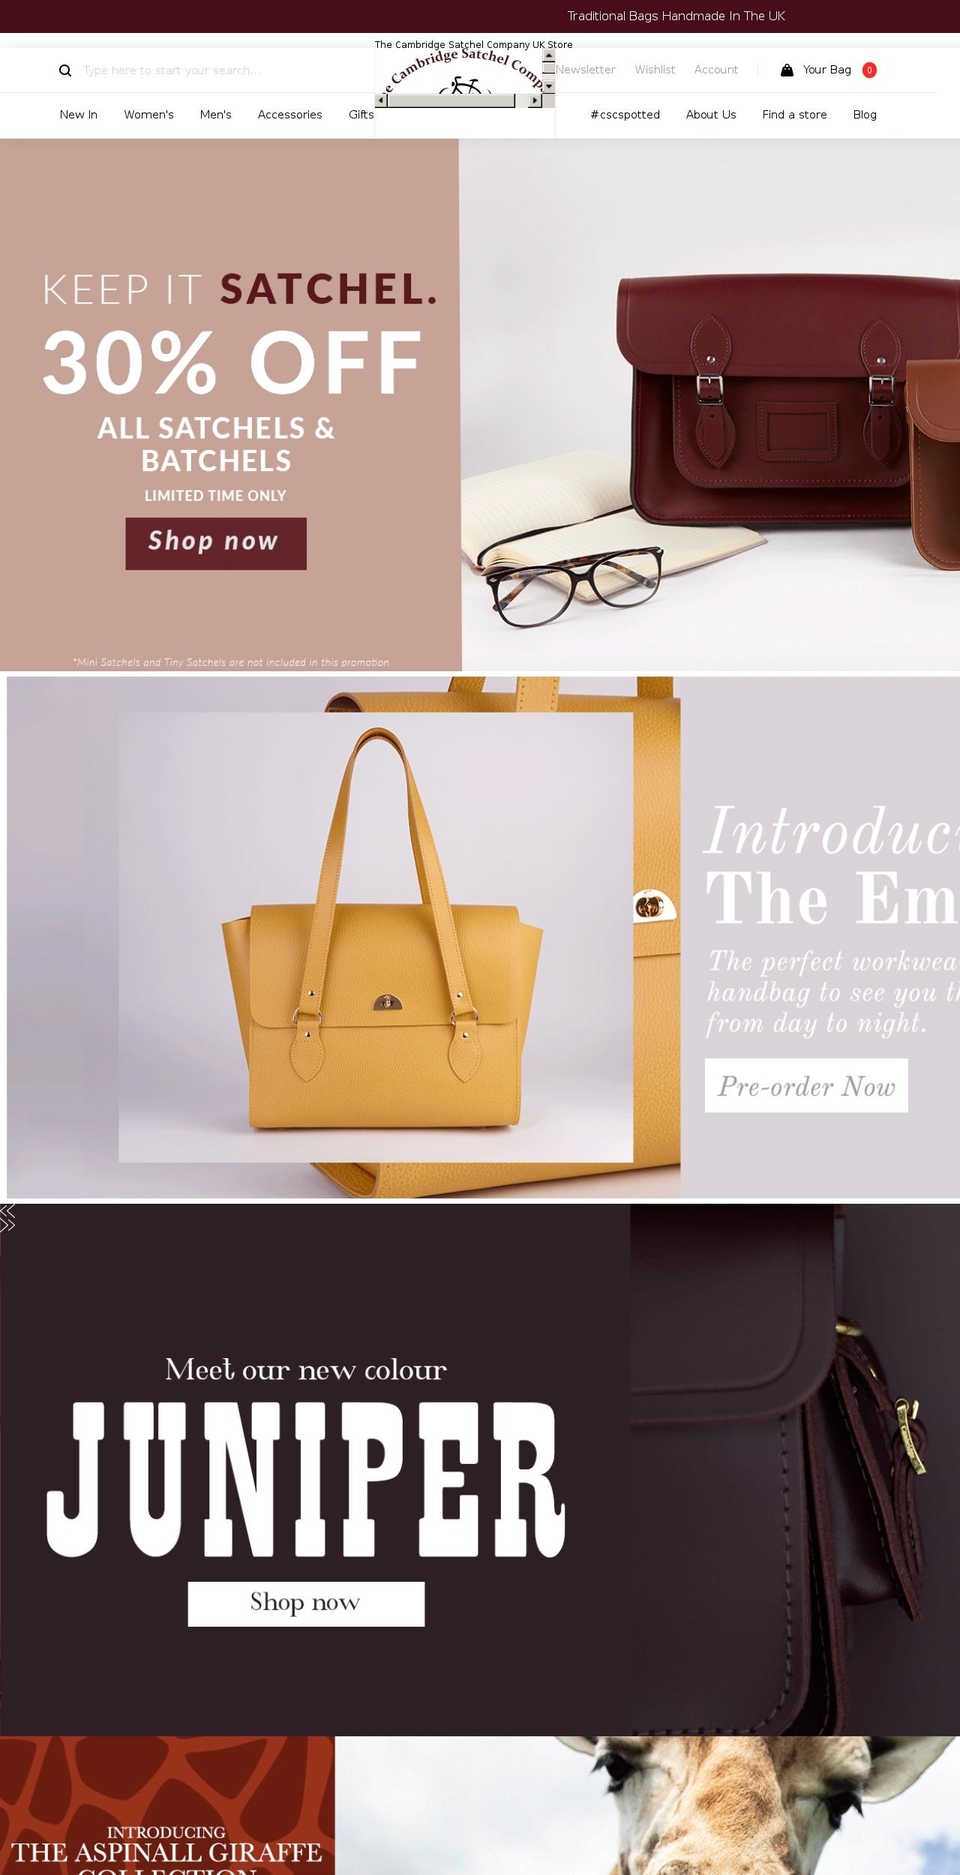 Cambridge Satchel Theme by BAO Shopify theme site example the-cambridge-satchels-company.biz